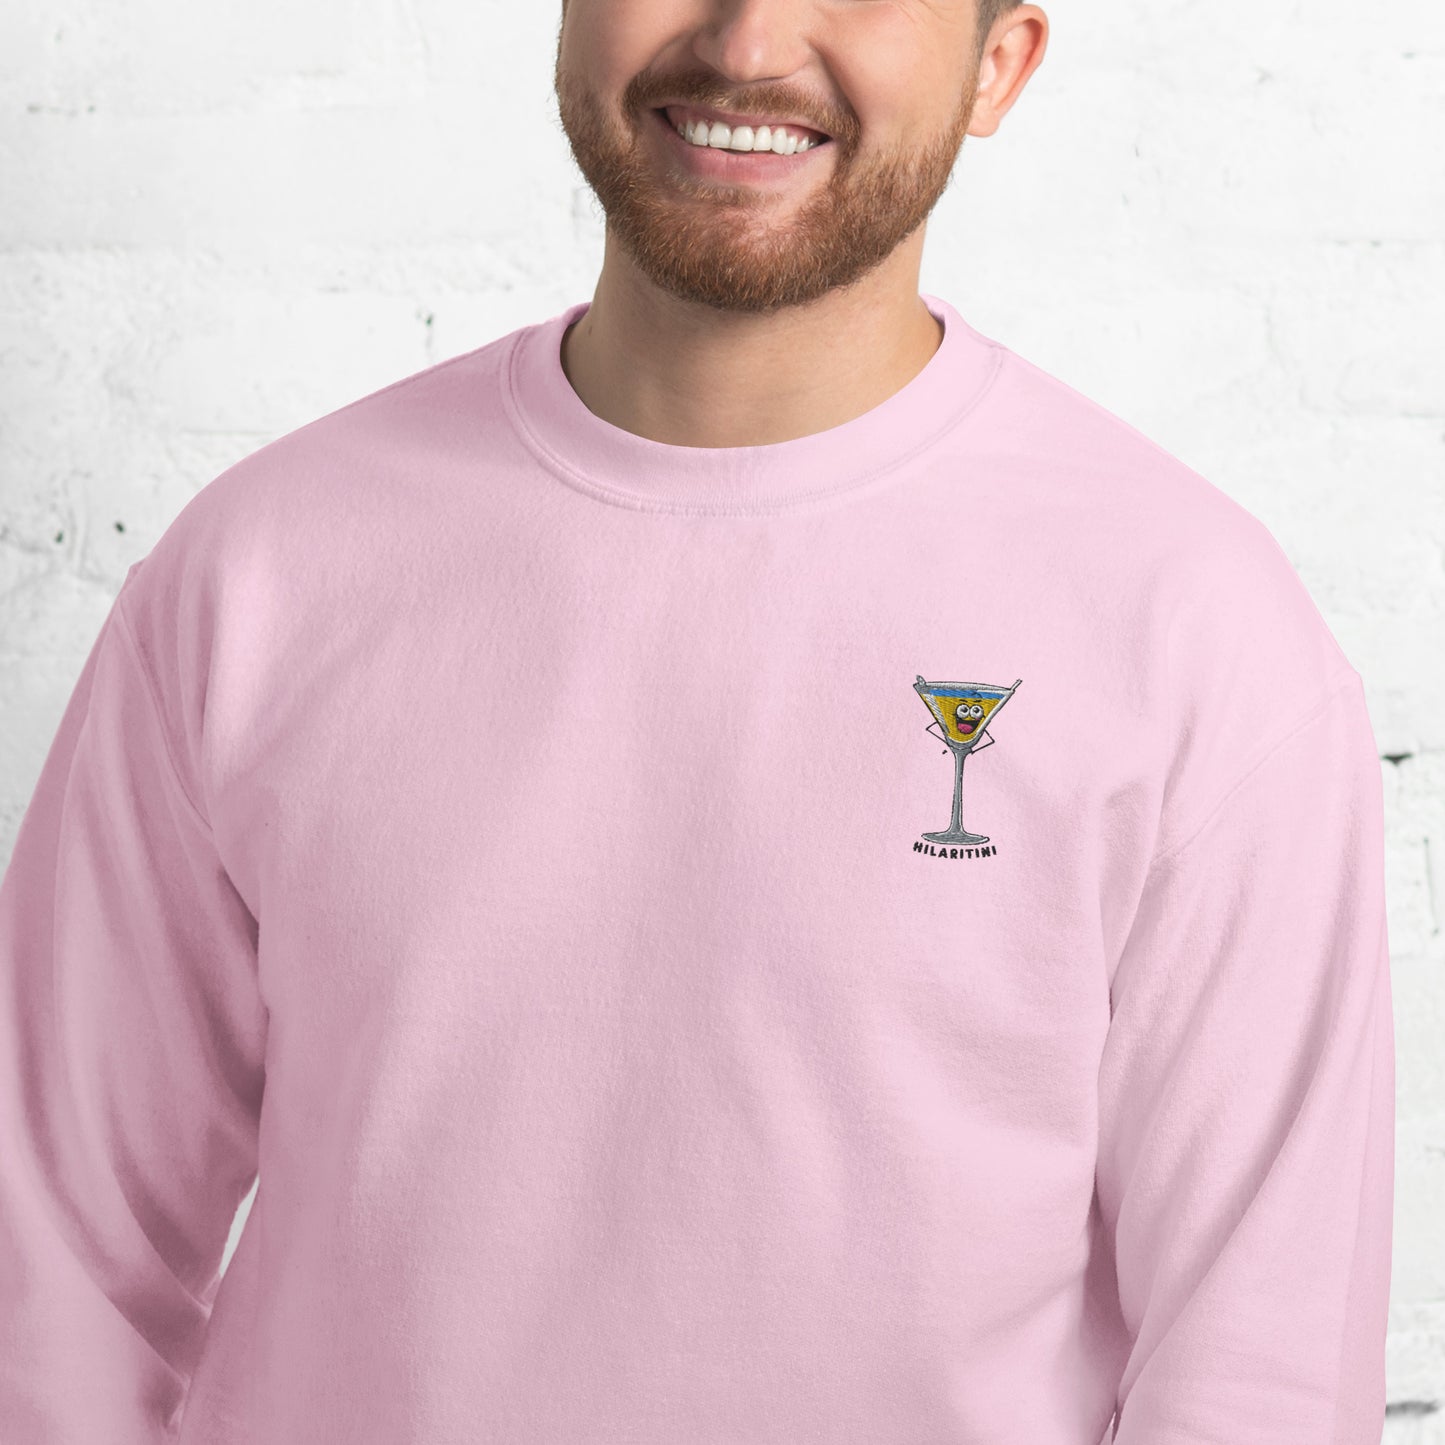 Hilaritini Unisex Embroidered Sweatshirt